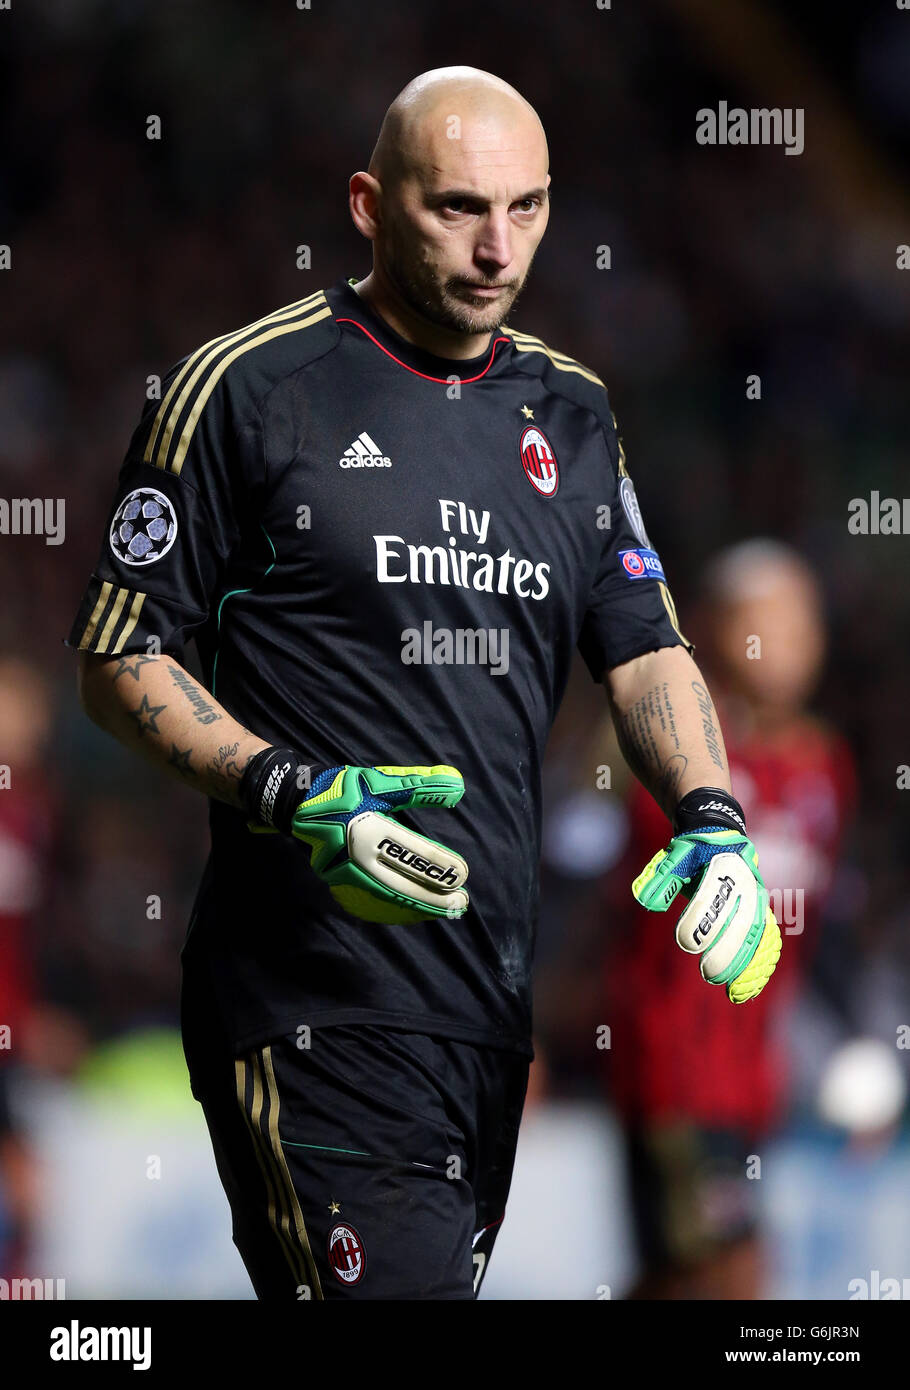 Christian Abbiati, AC Milan Foto stock - Alamy